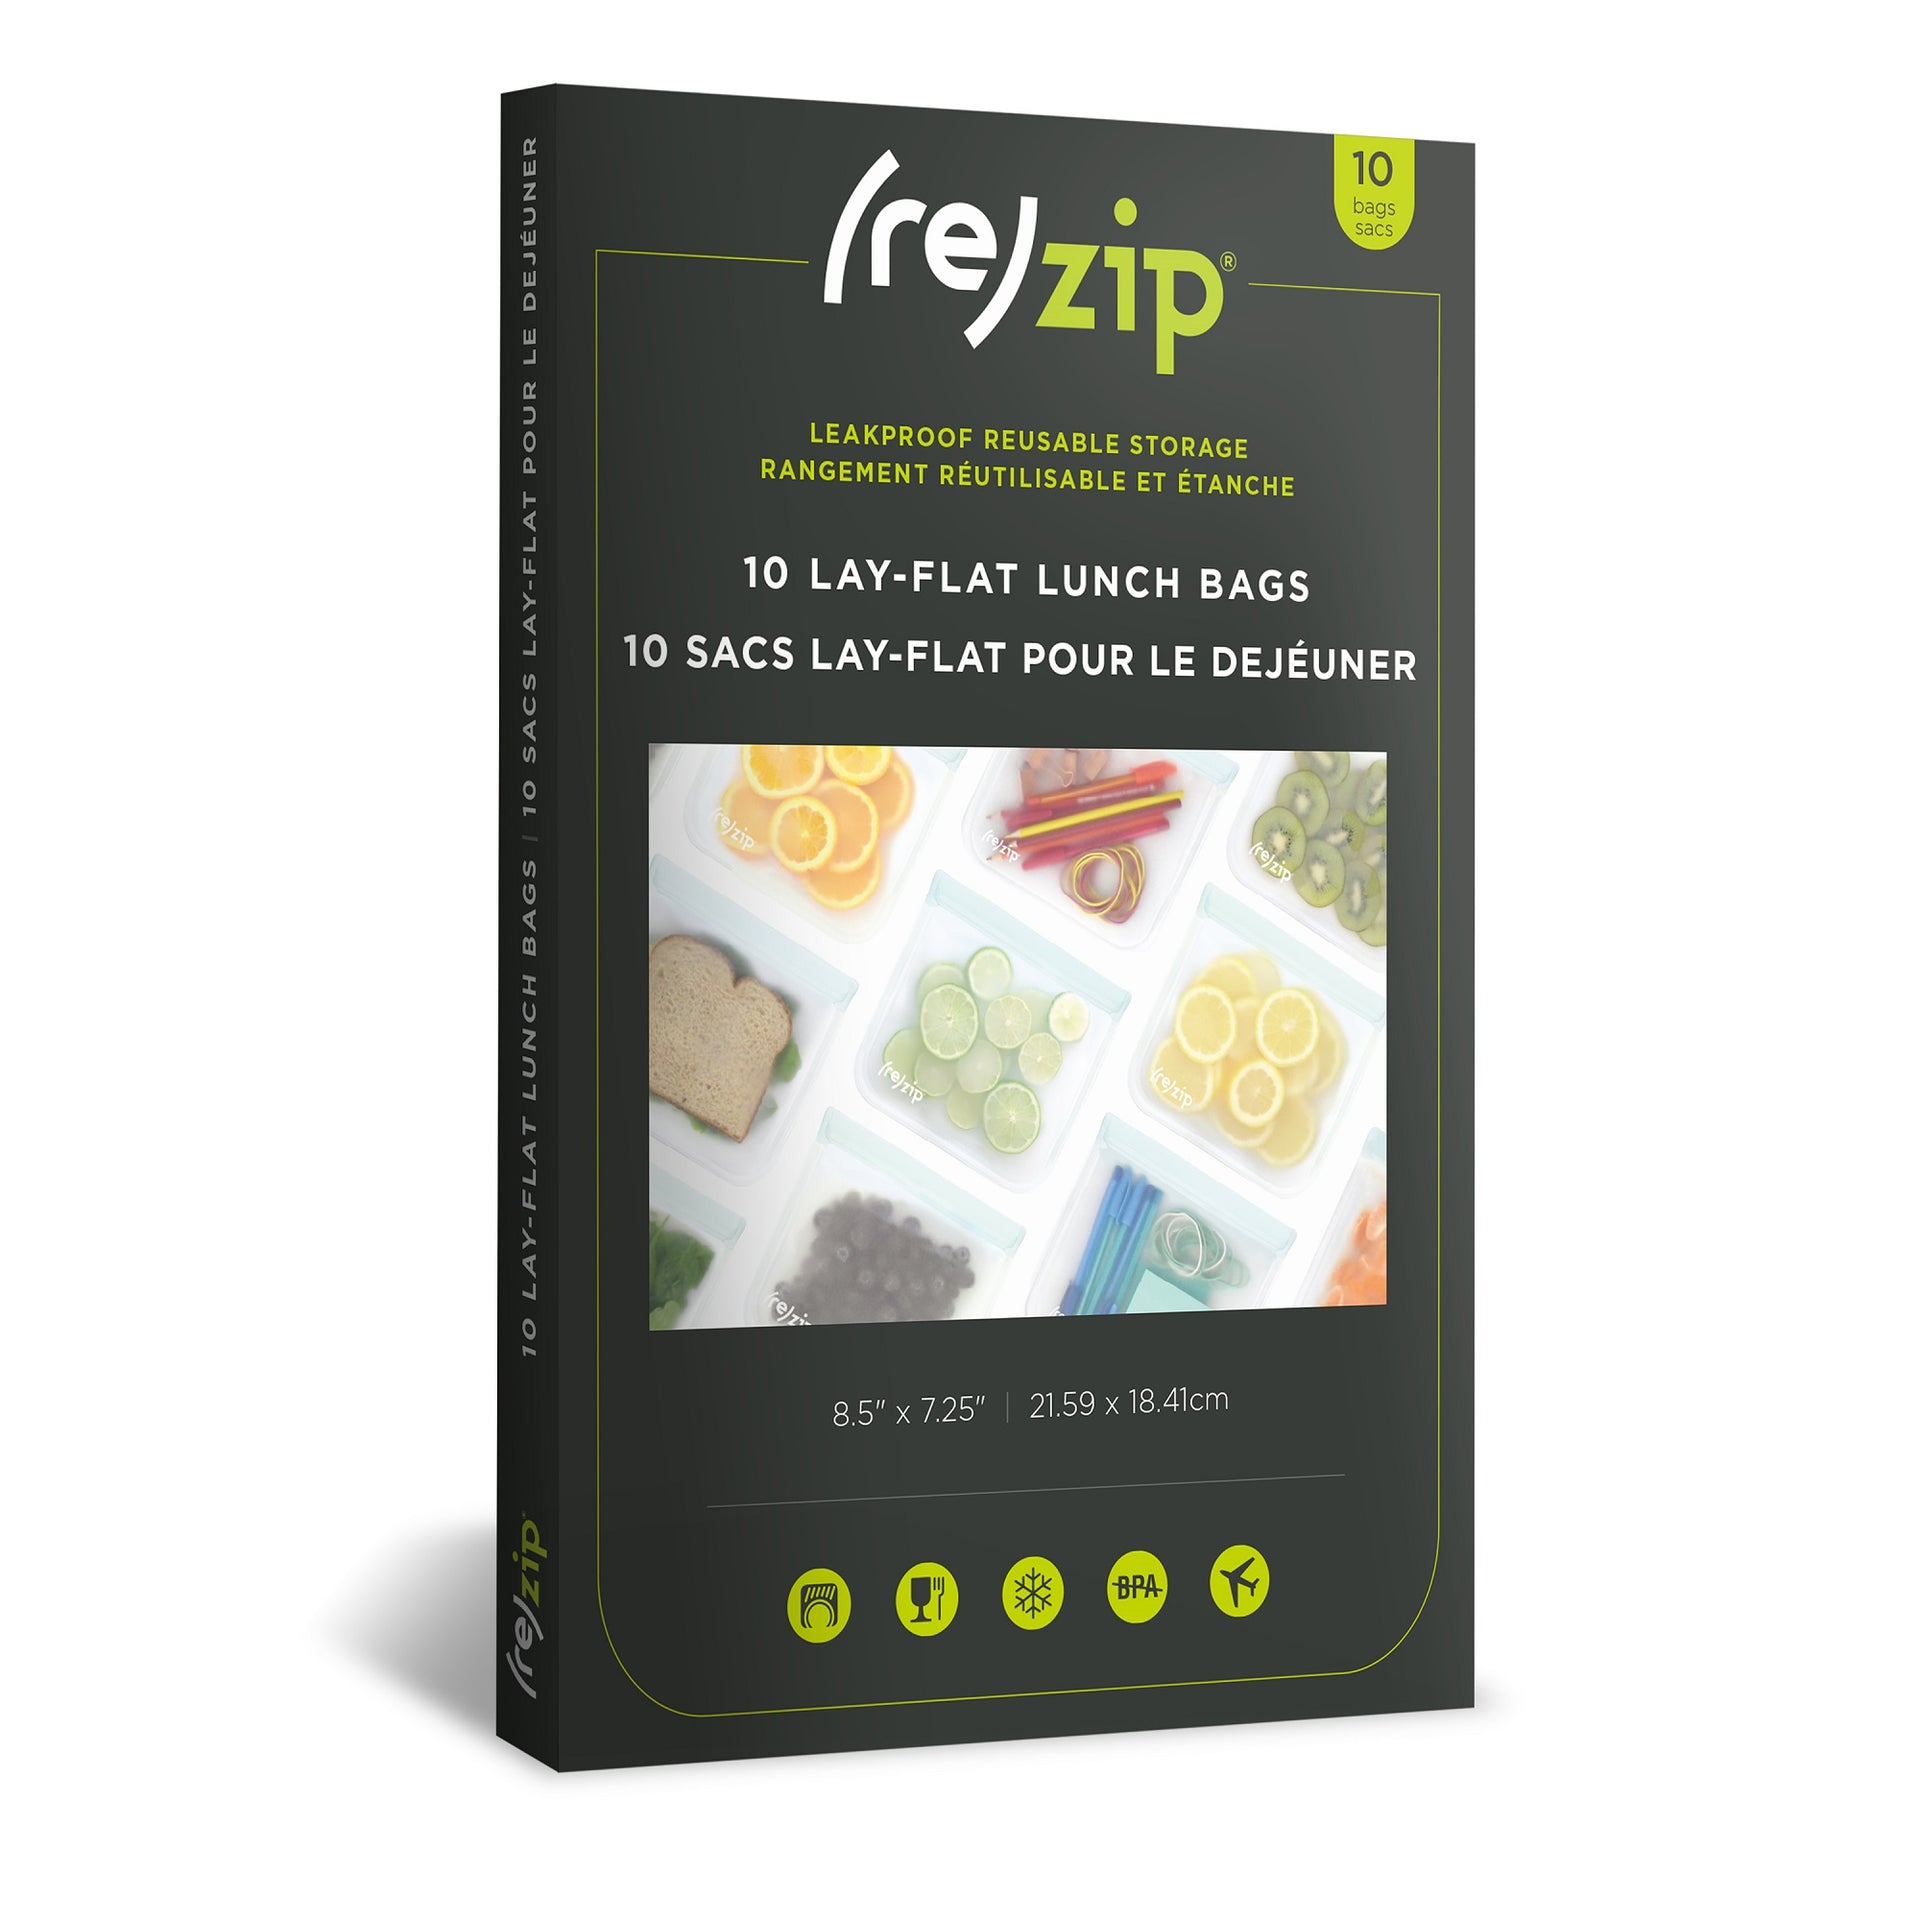 re)zip Reusable Leak-proof Food Storage Flat sandwich lunch Bag - 5ct :  Target